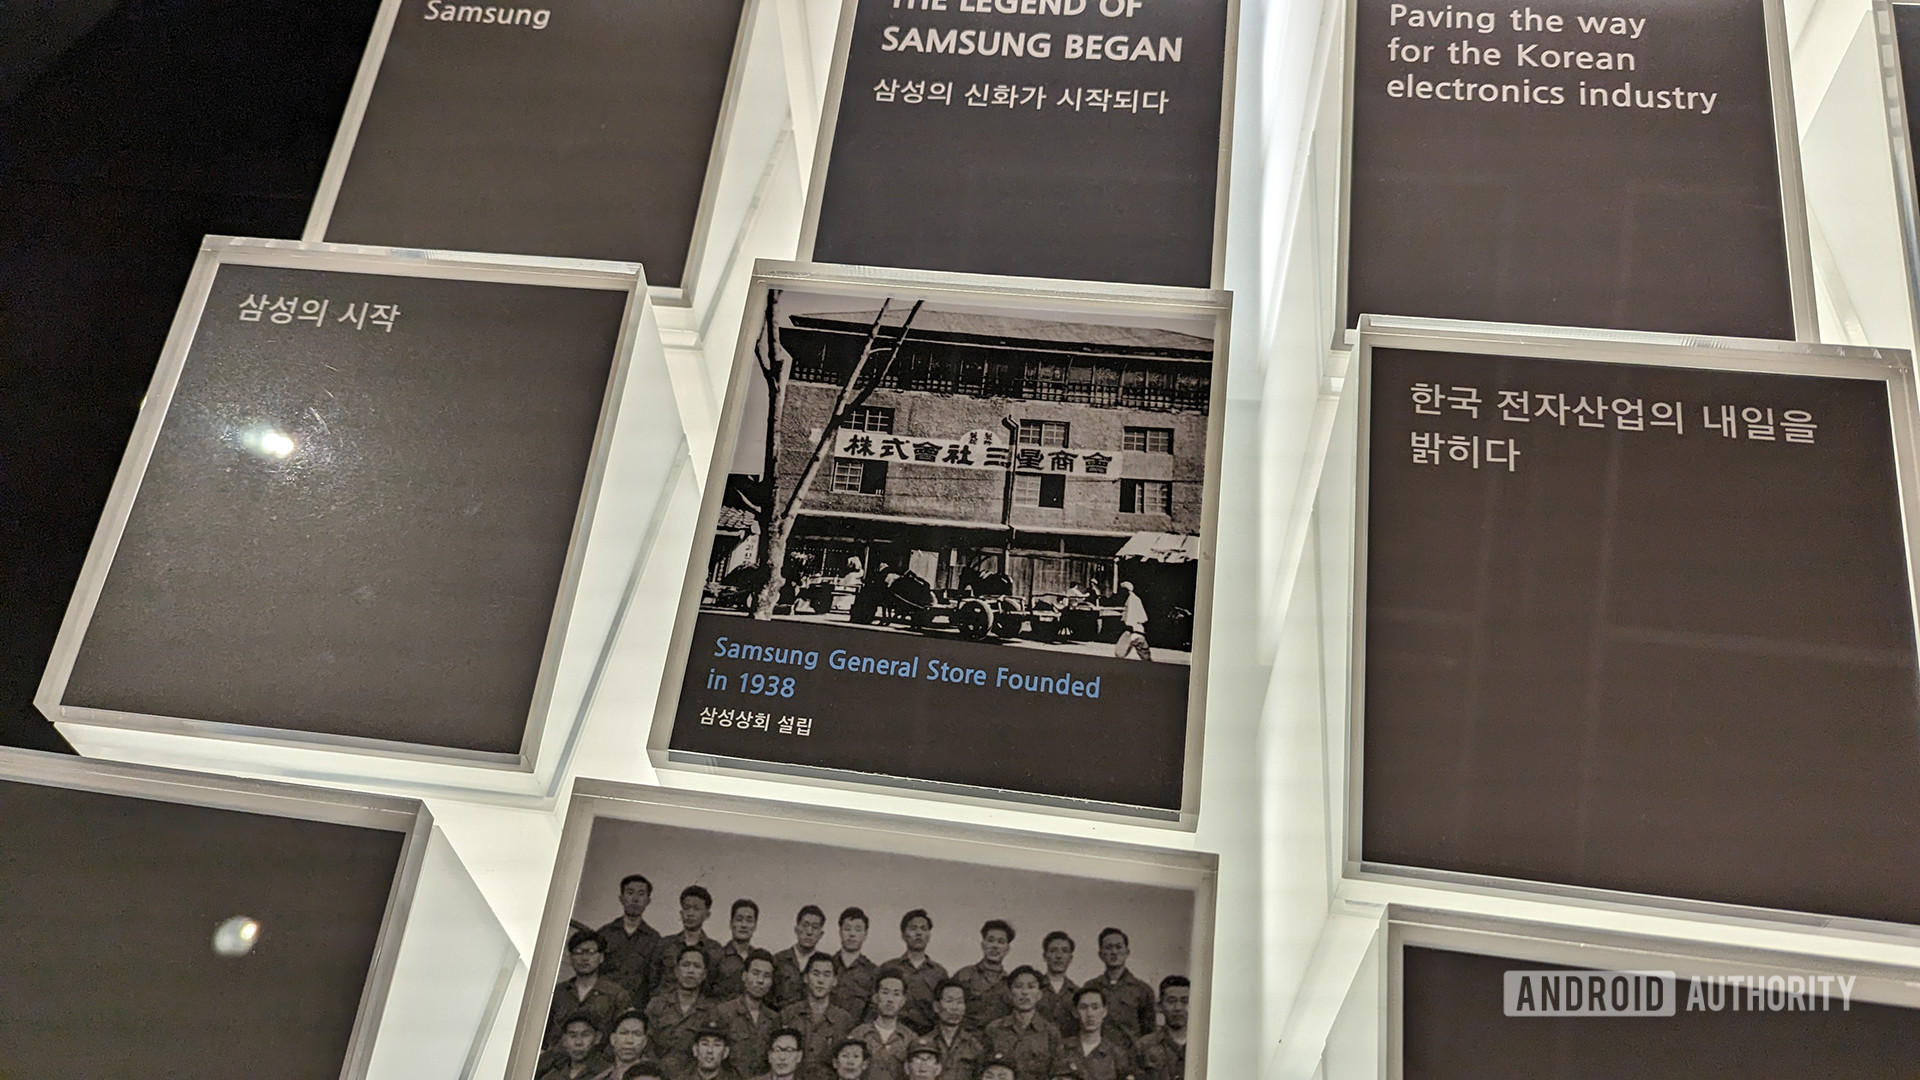 Samsung Innovation Museum First Samsung General Store 1938